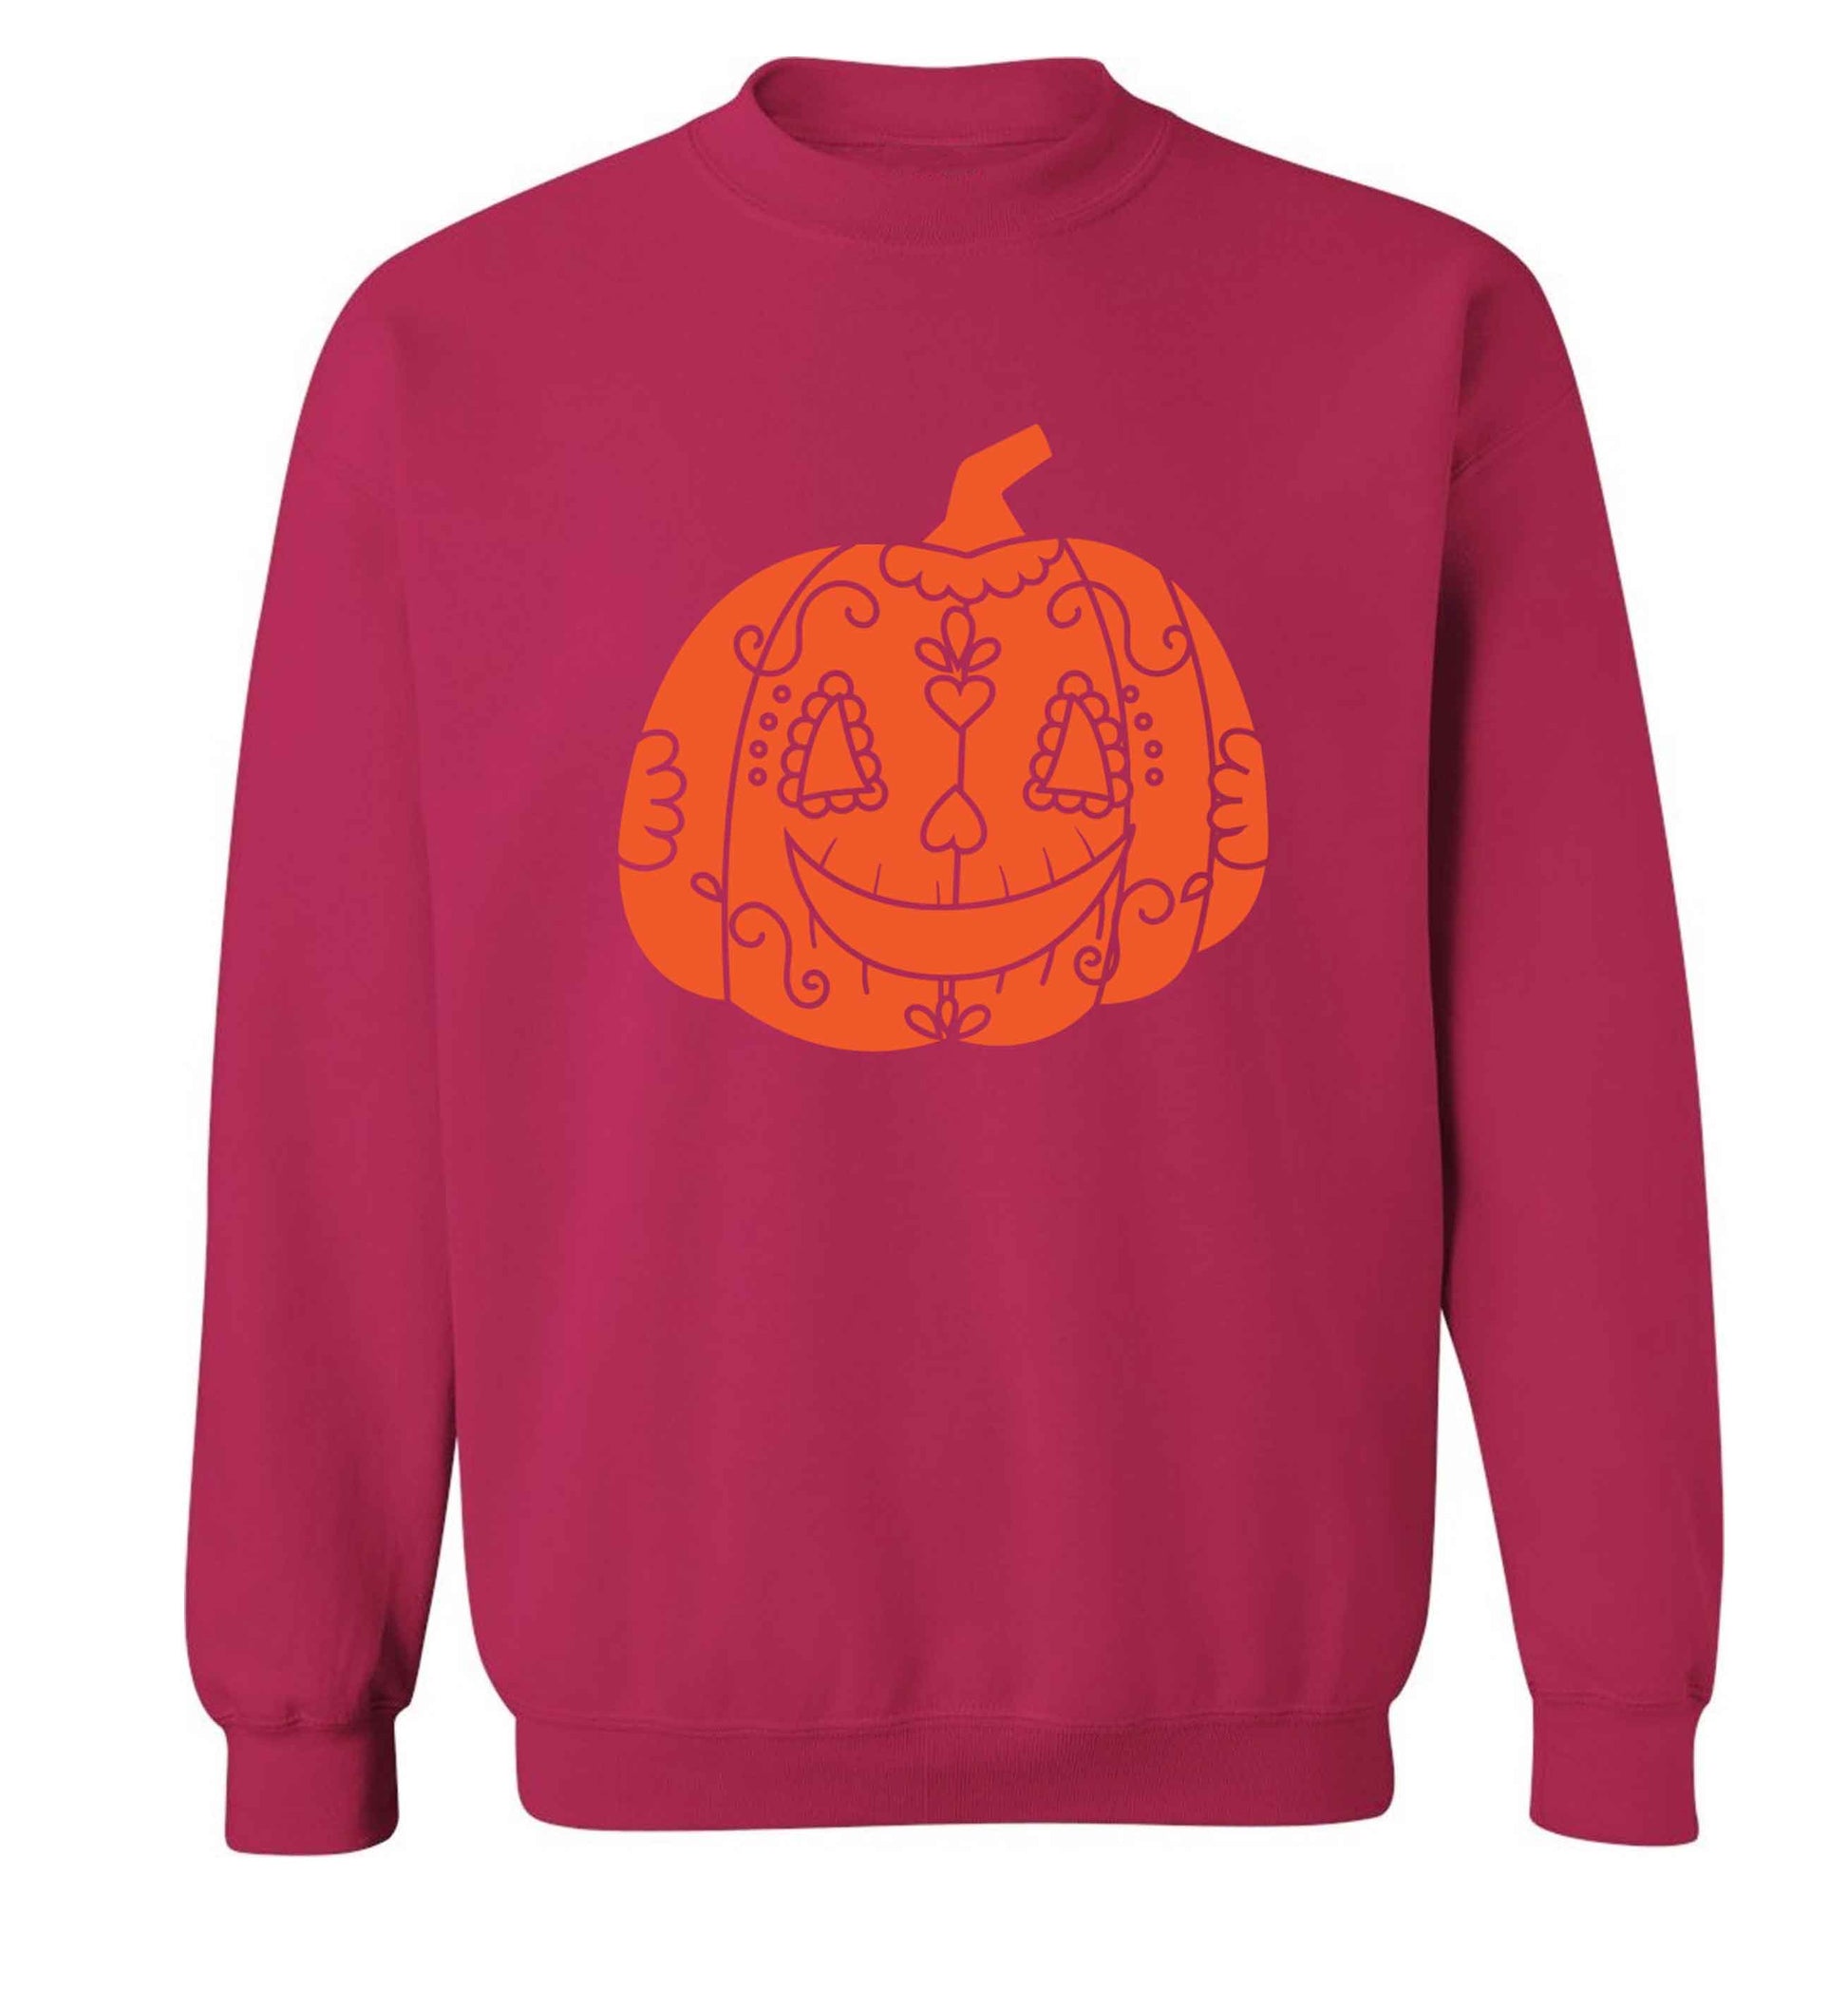 Pumpkin sugar skull adult's unisex pink sweater 2XL